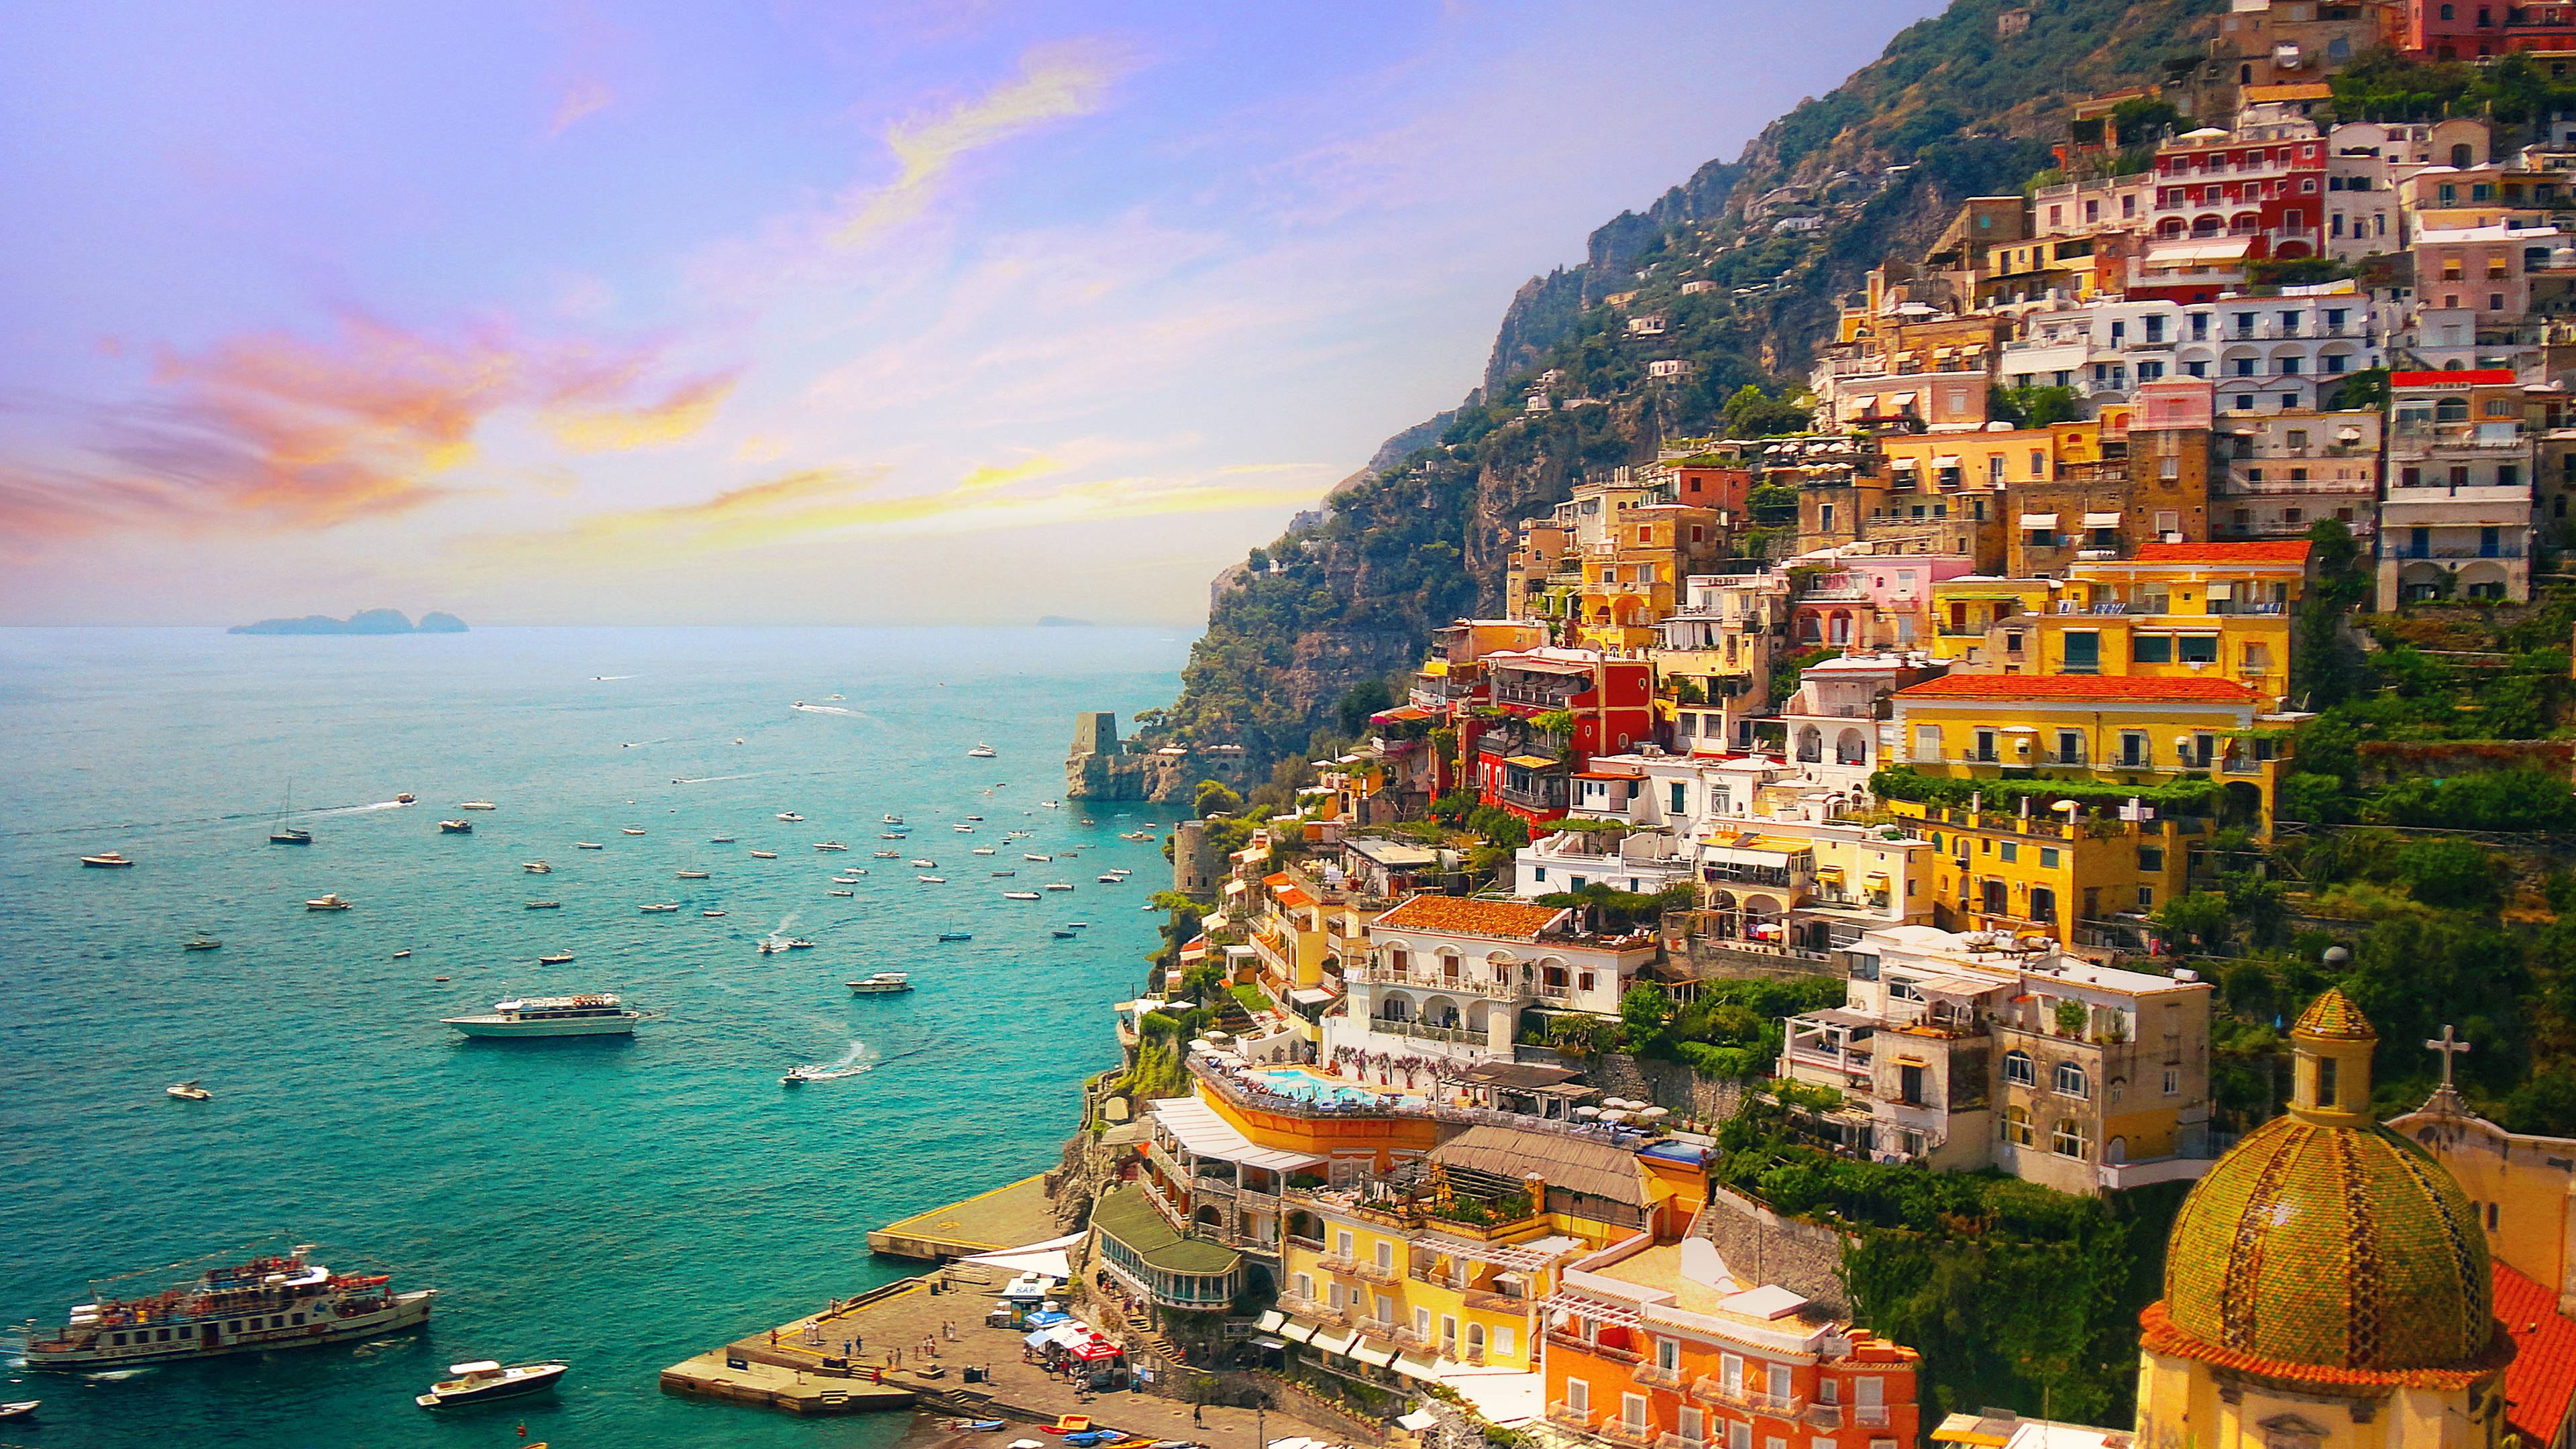 Descubre la belleza única de la Costa Amalfitana